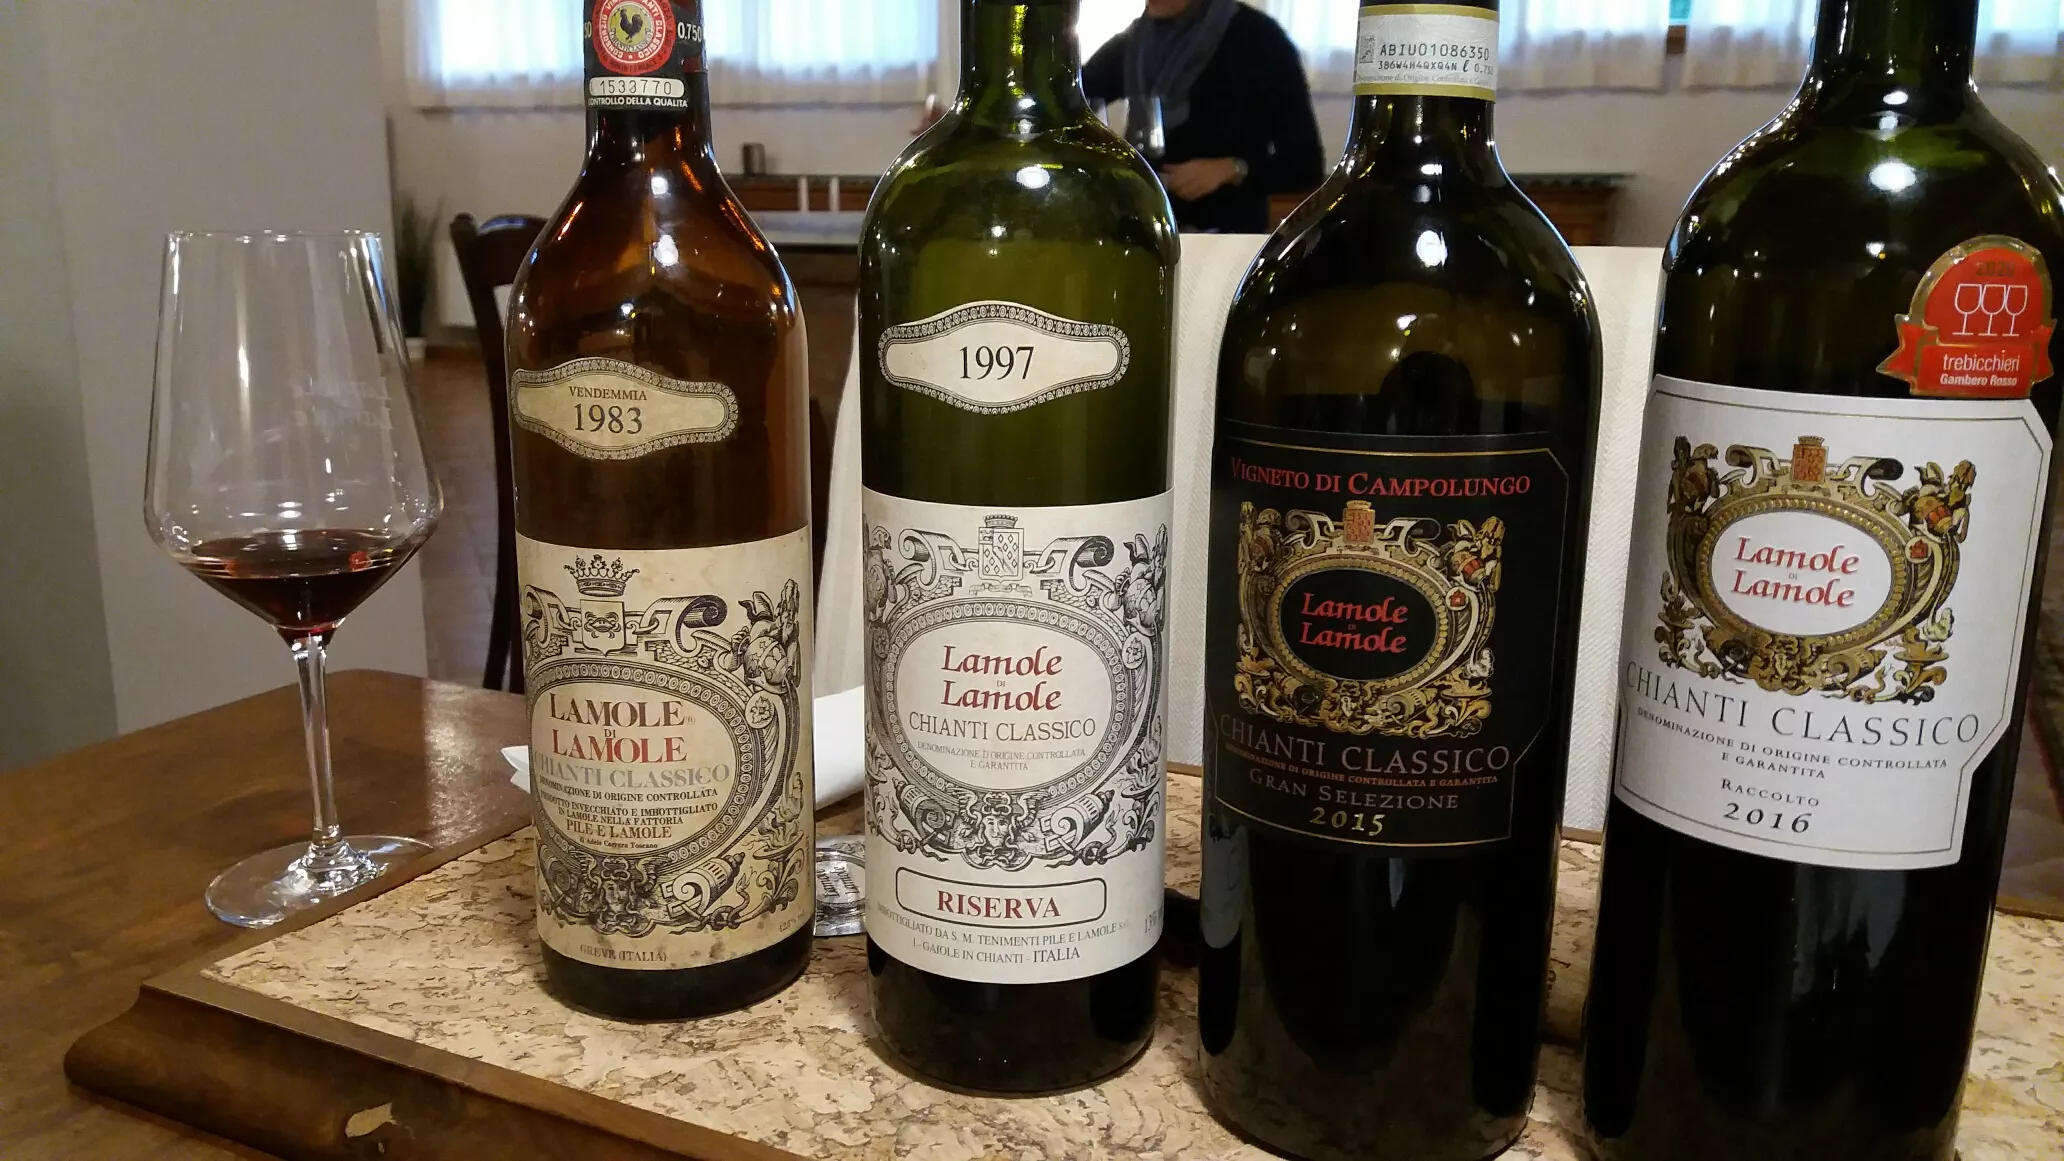 Lamole di Lamole in Italy, Europe | Wineries - Rated 0.9